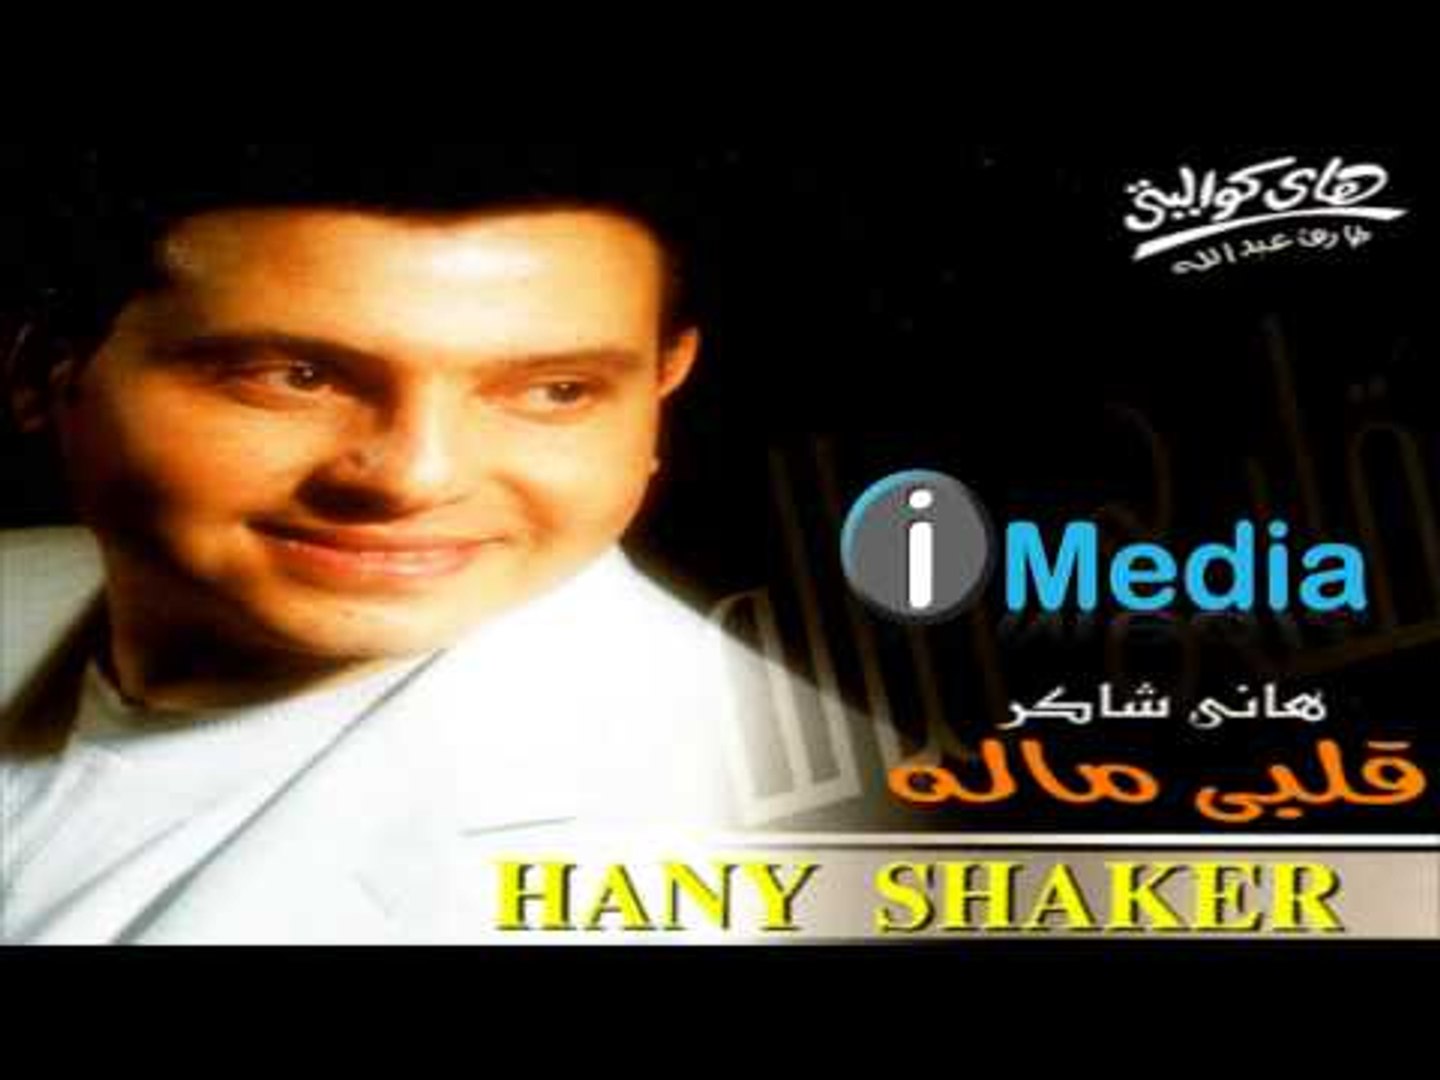 Hany Shaker - Alby Malo / هاني شاكر - قلبي ماله - video Dailymotion